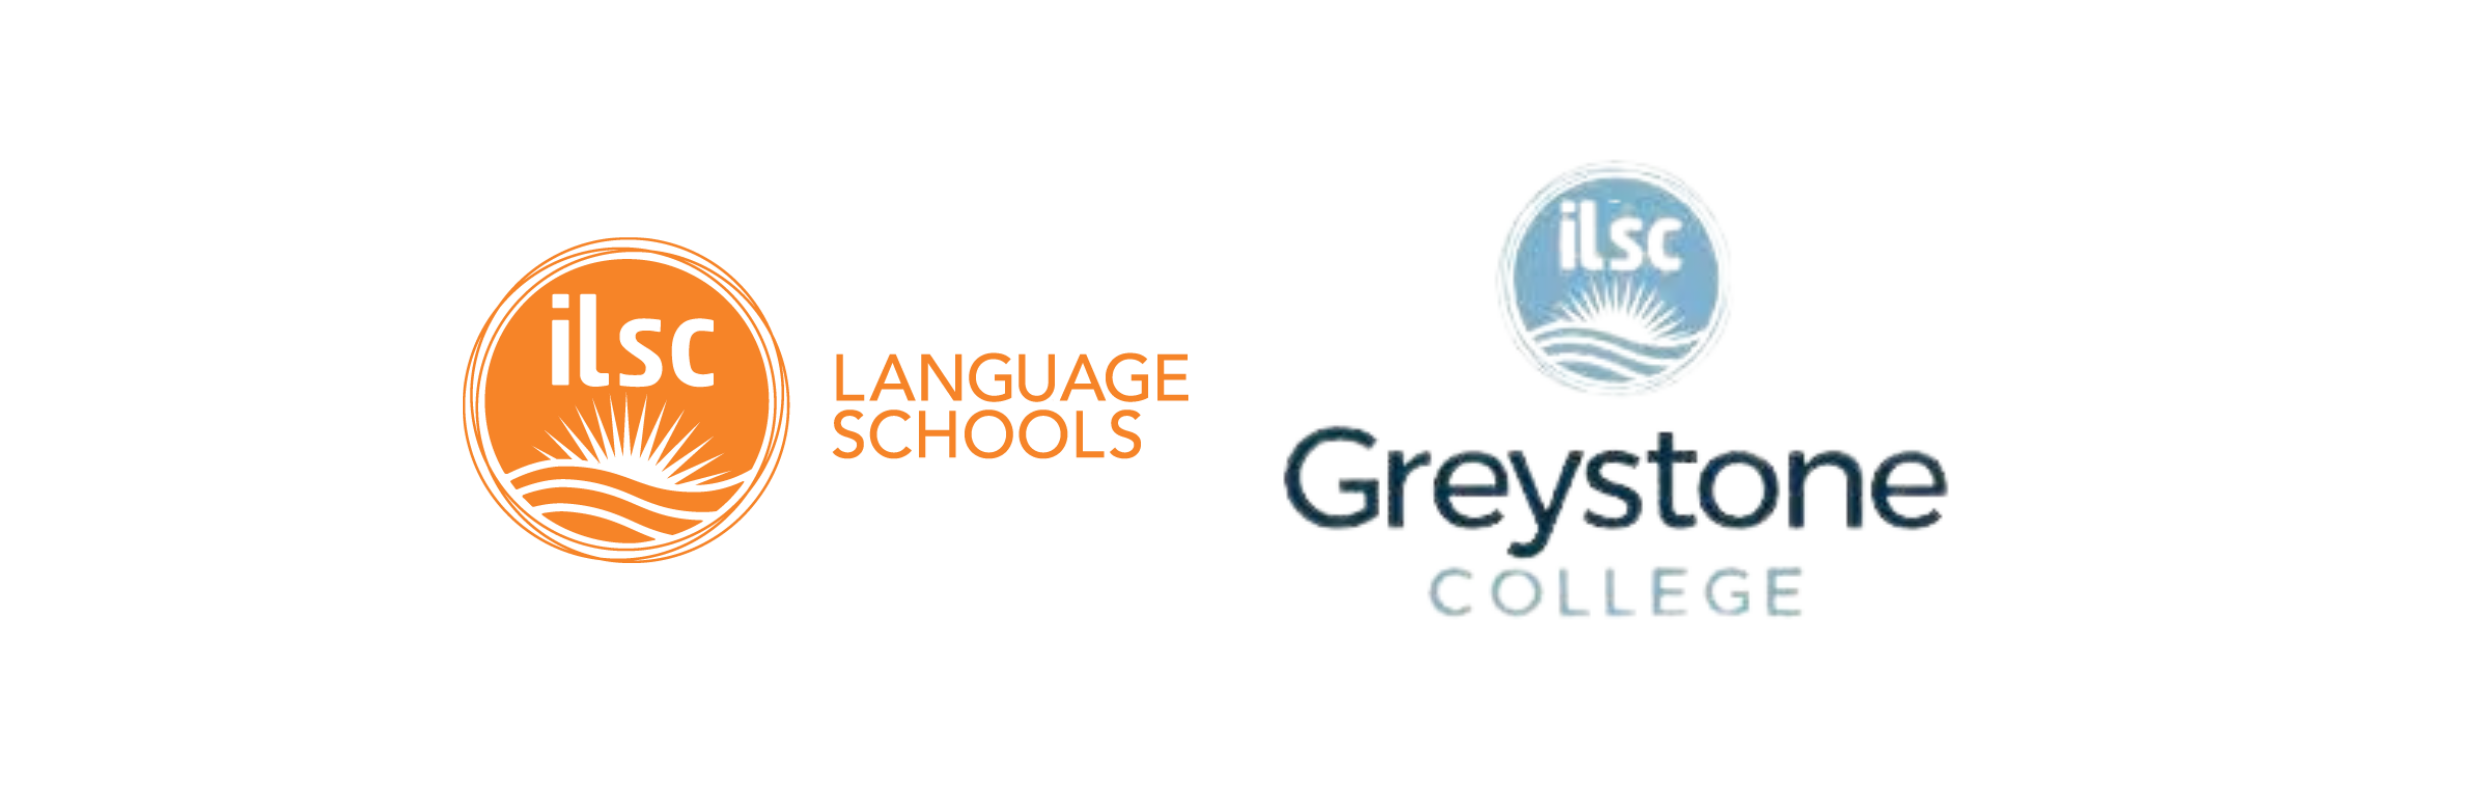 ILSC Language Schools and Greystone College